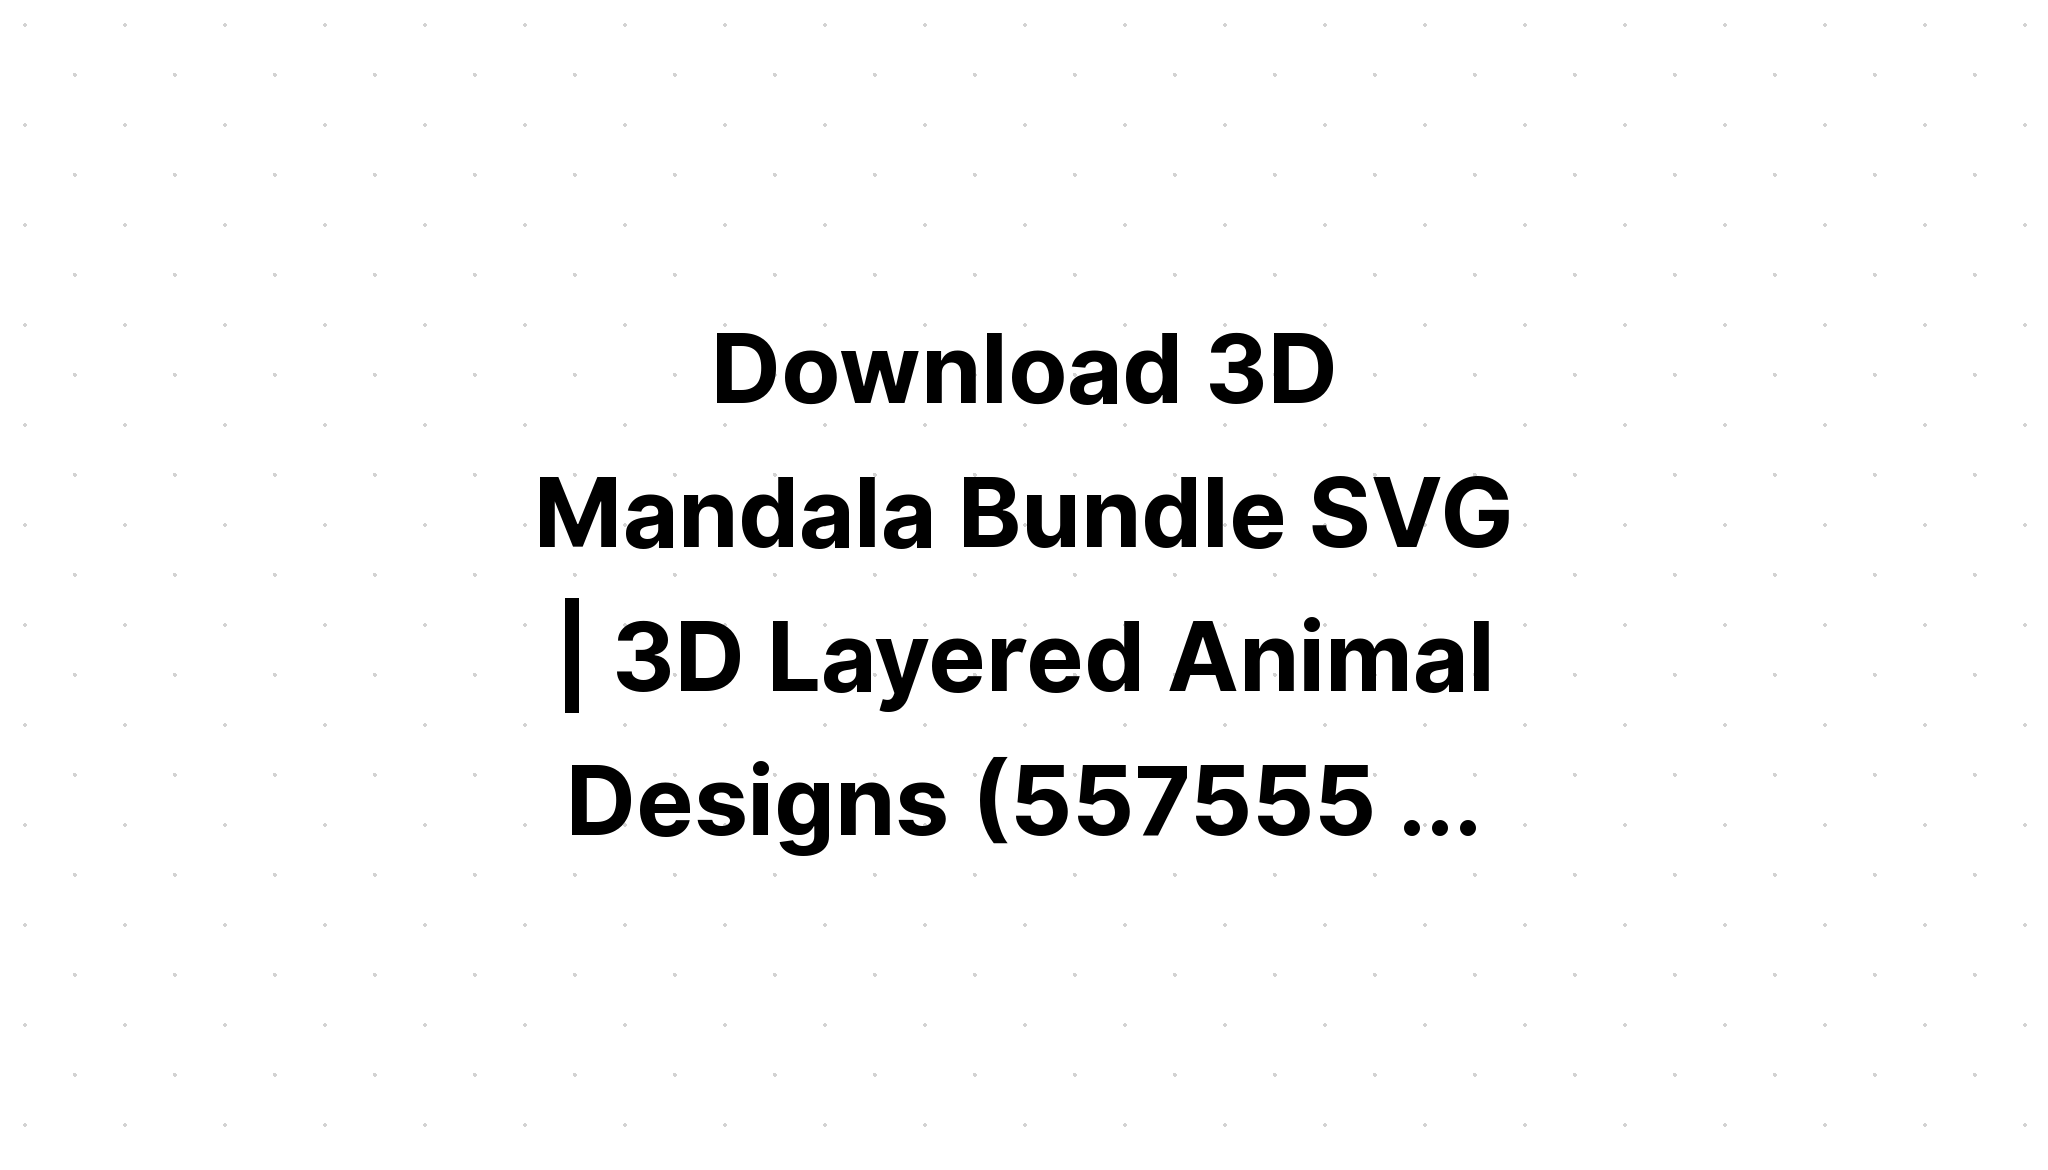 Download Layered 3D Animal Mandala Svg Free Design - Layered SVG Cut File